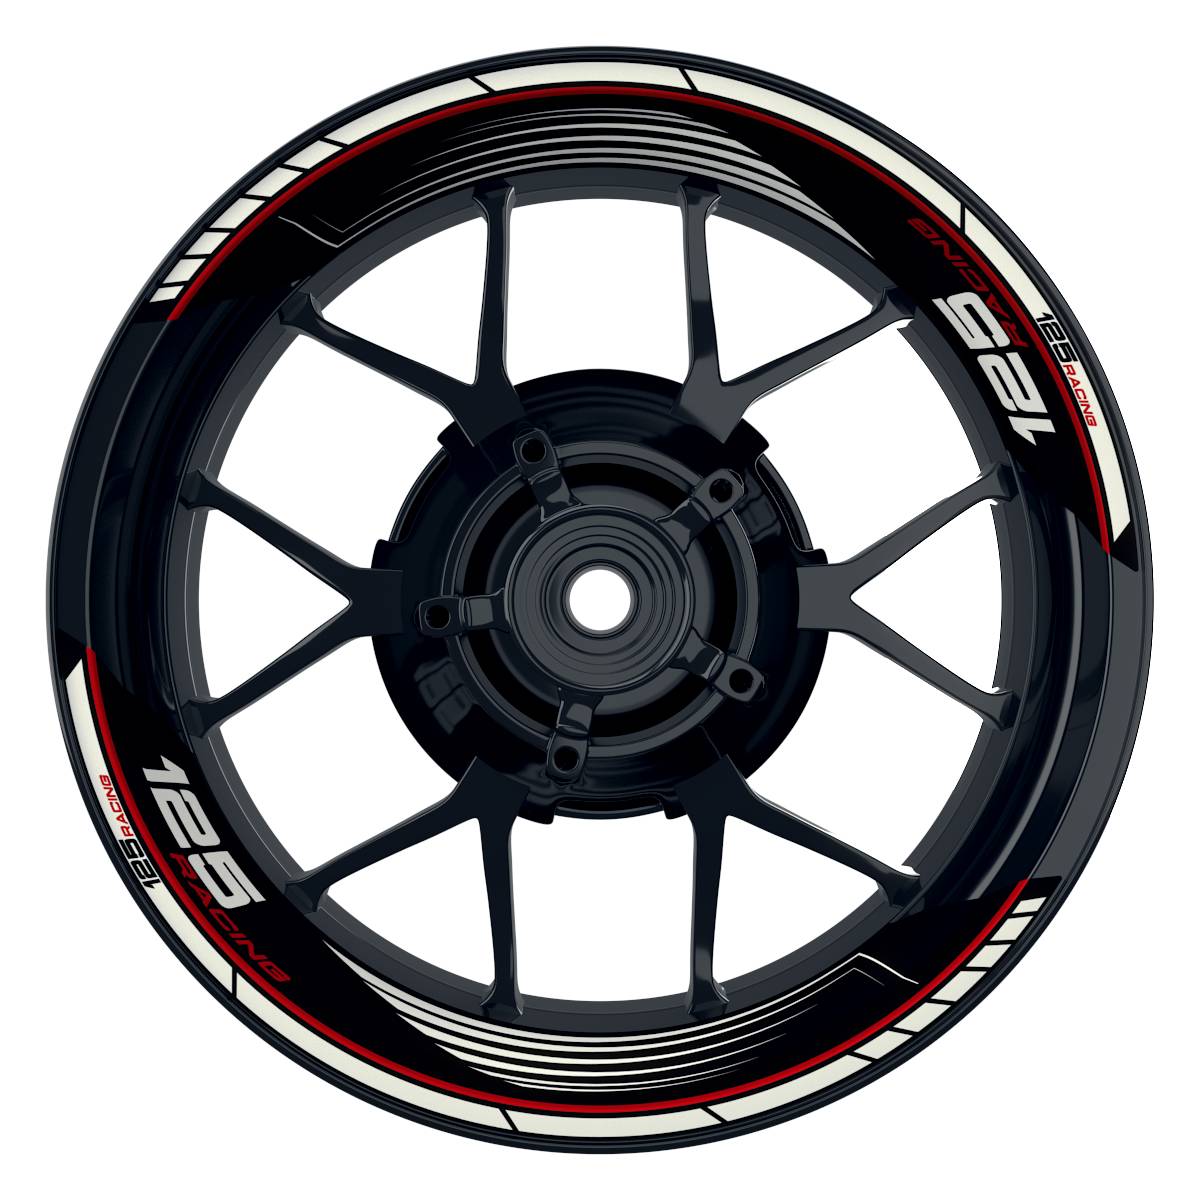 KTM Racing 125 SAW schwarz rot Frontansicht